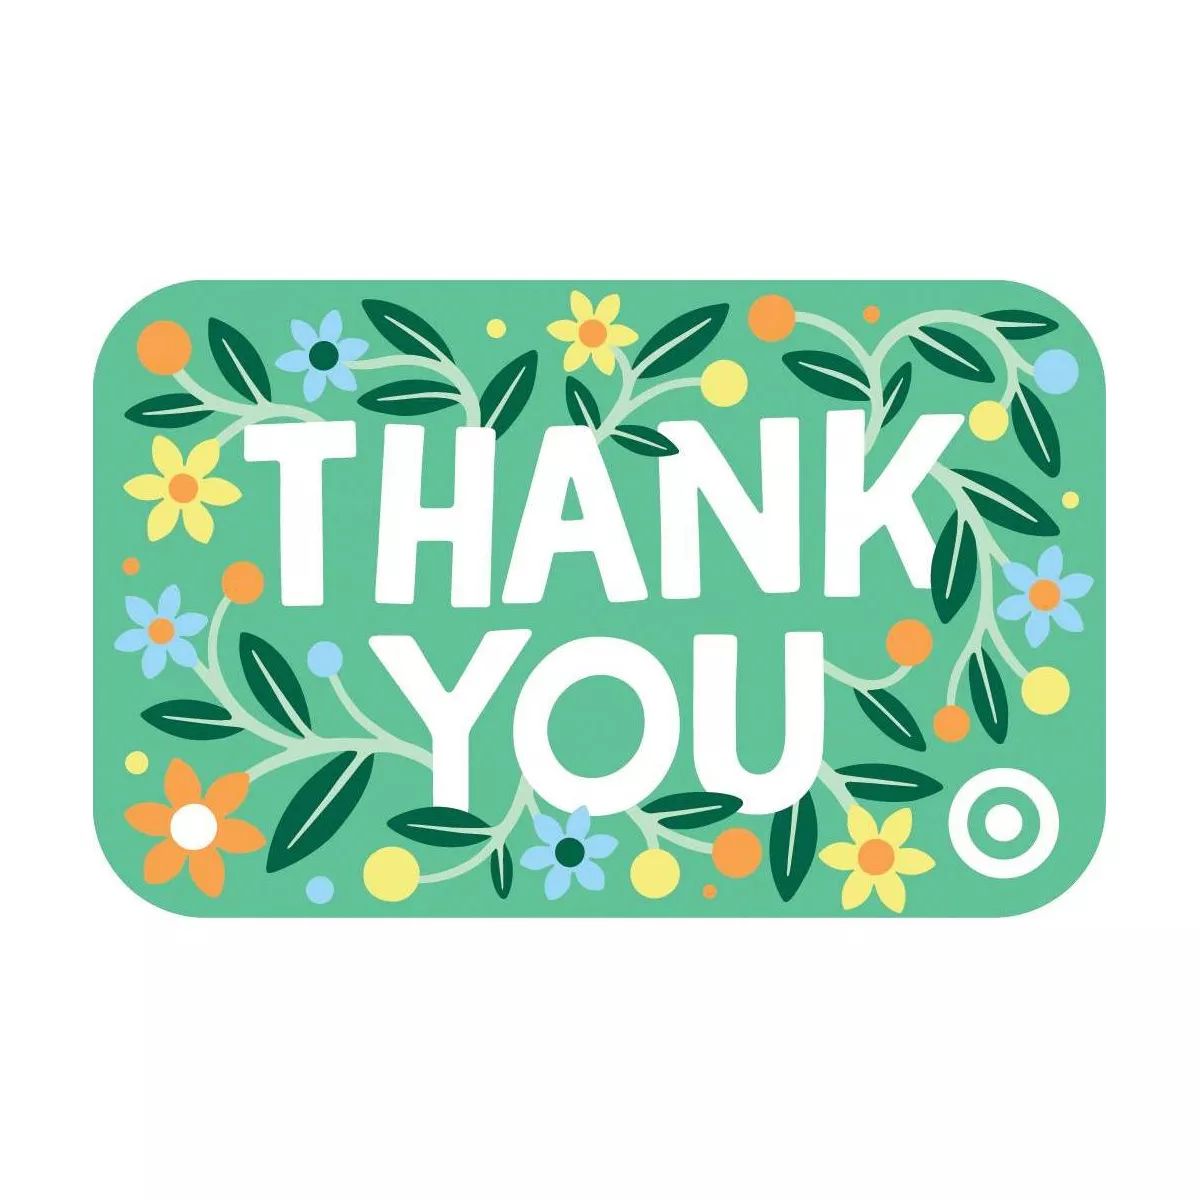 Thank You Greenery Target GiftCard | Target